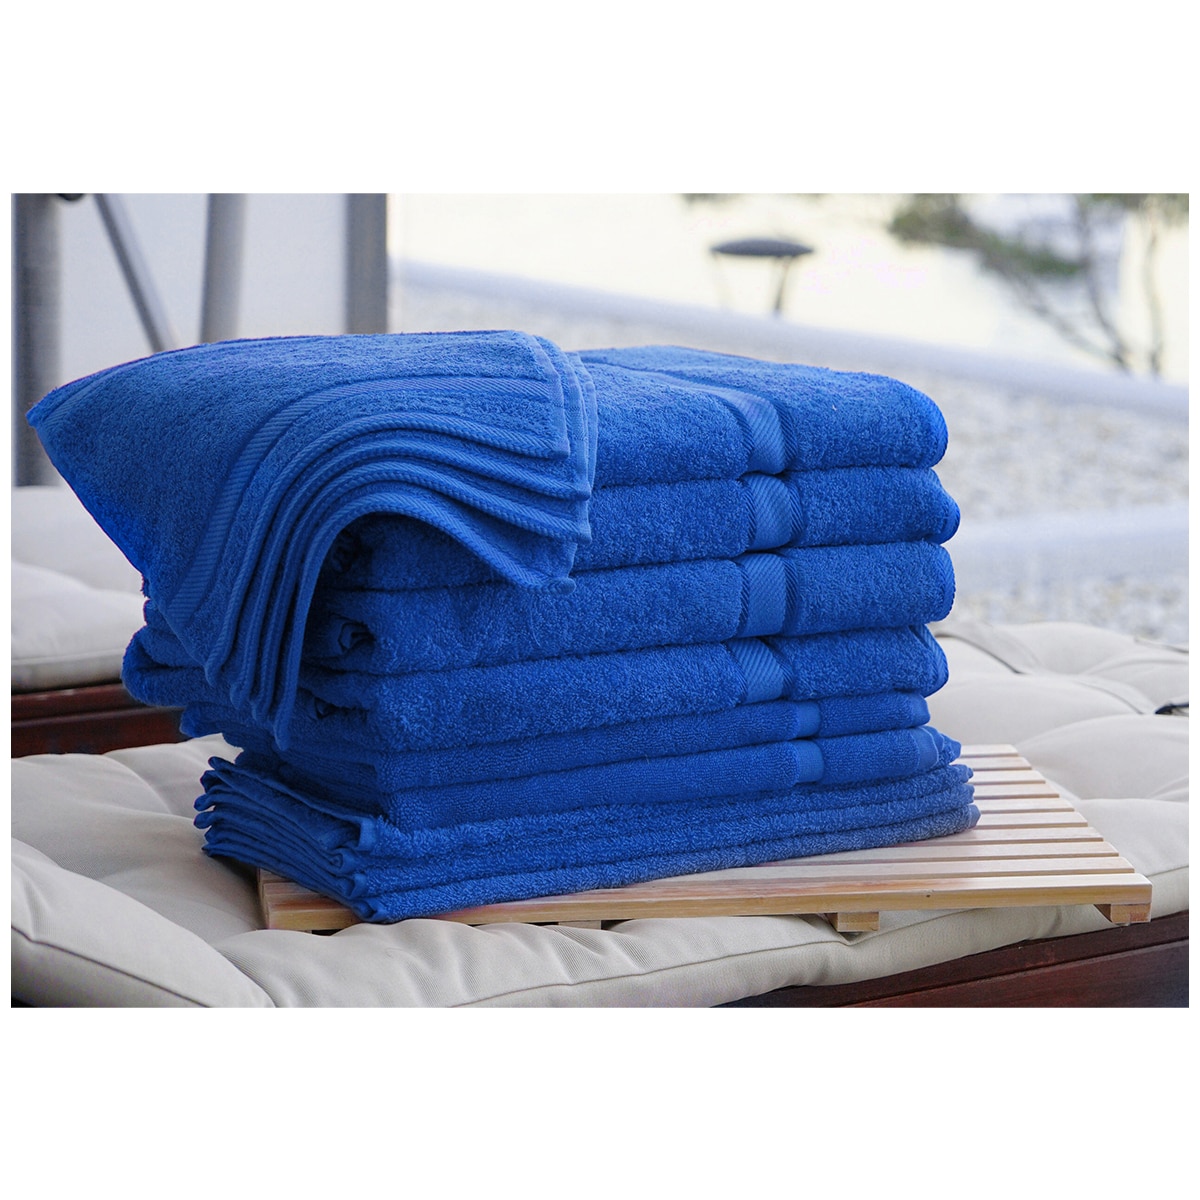 Kingtex Plain dyed 100% Combed Cotton towel range 550gsm Bath Sheet set 14 piece - Royal Blue